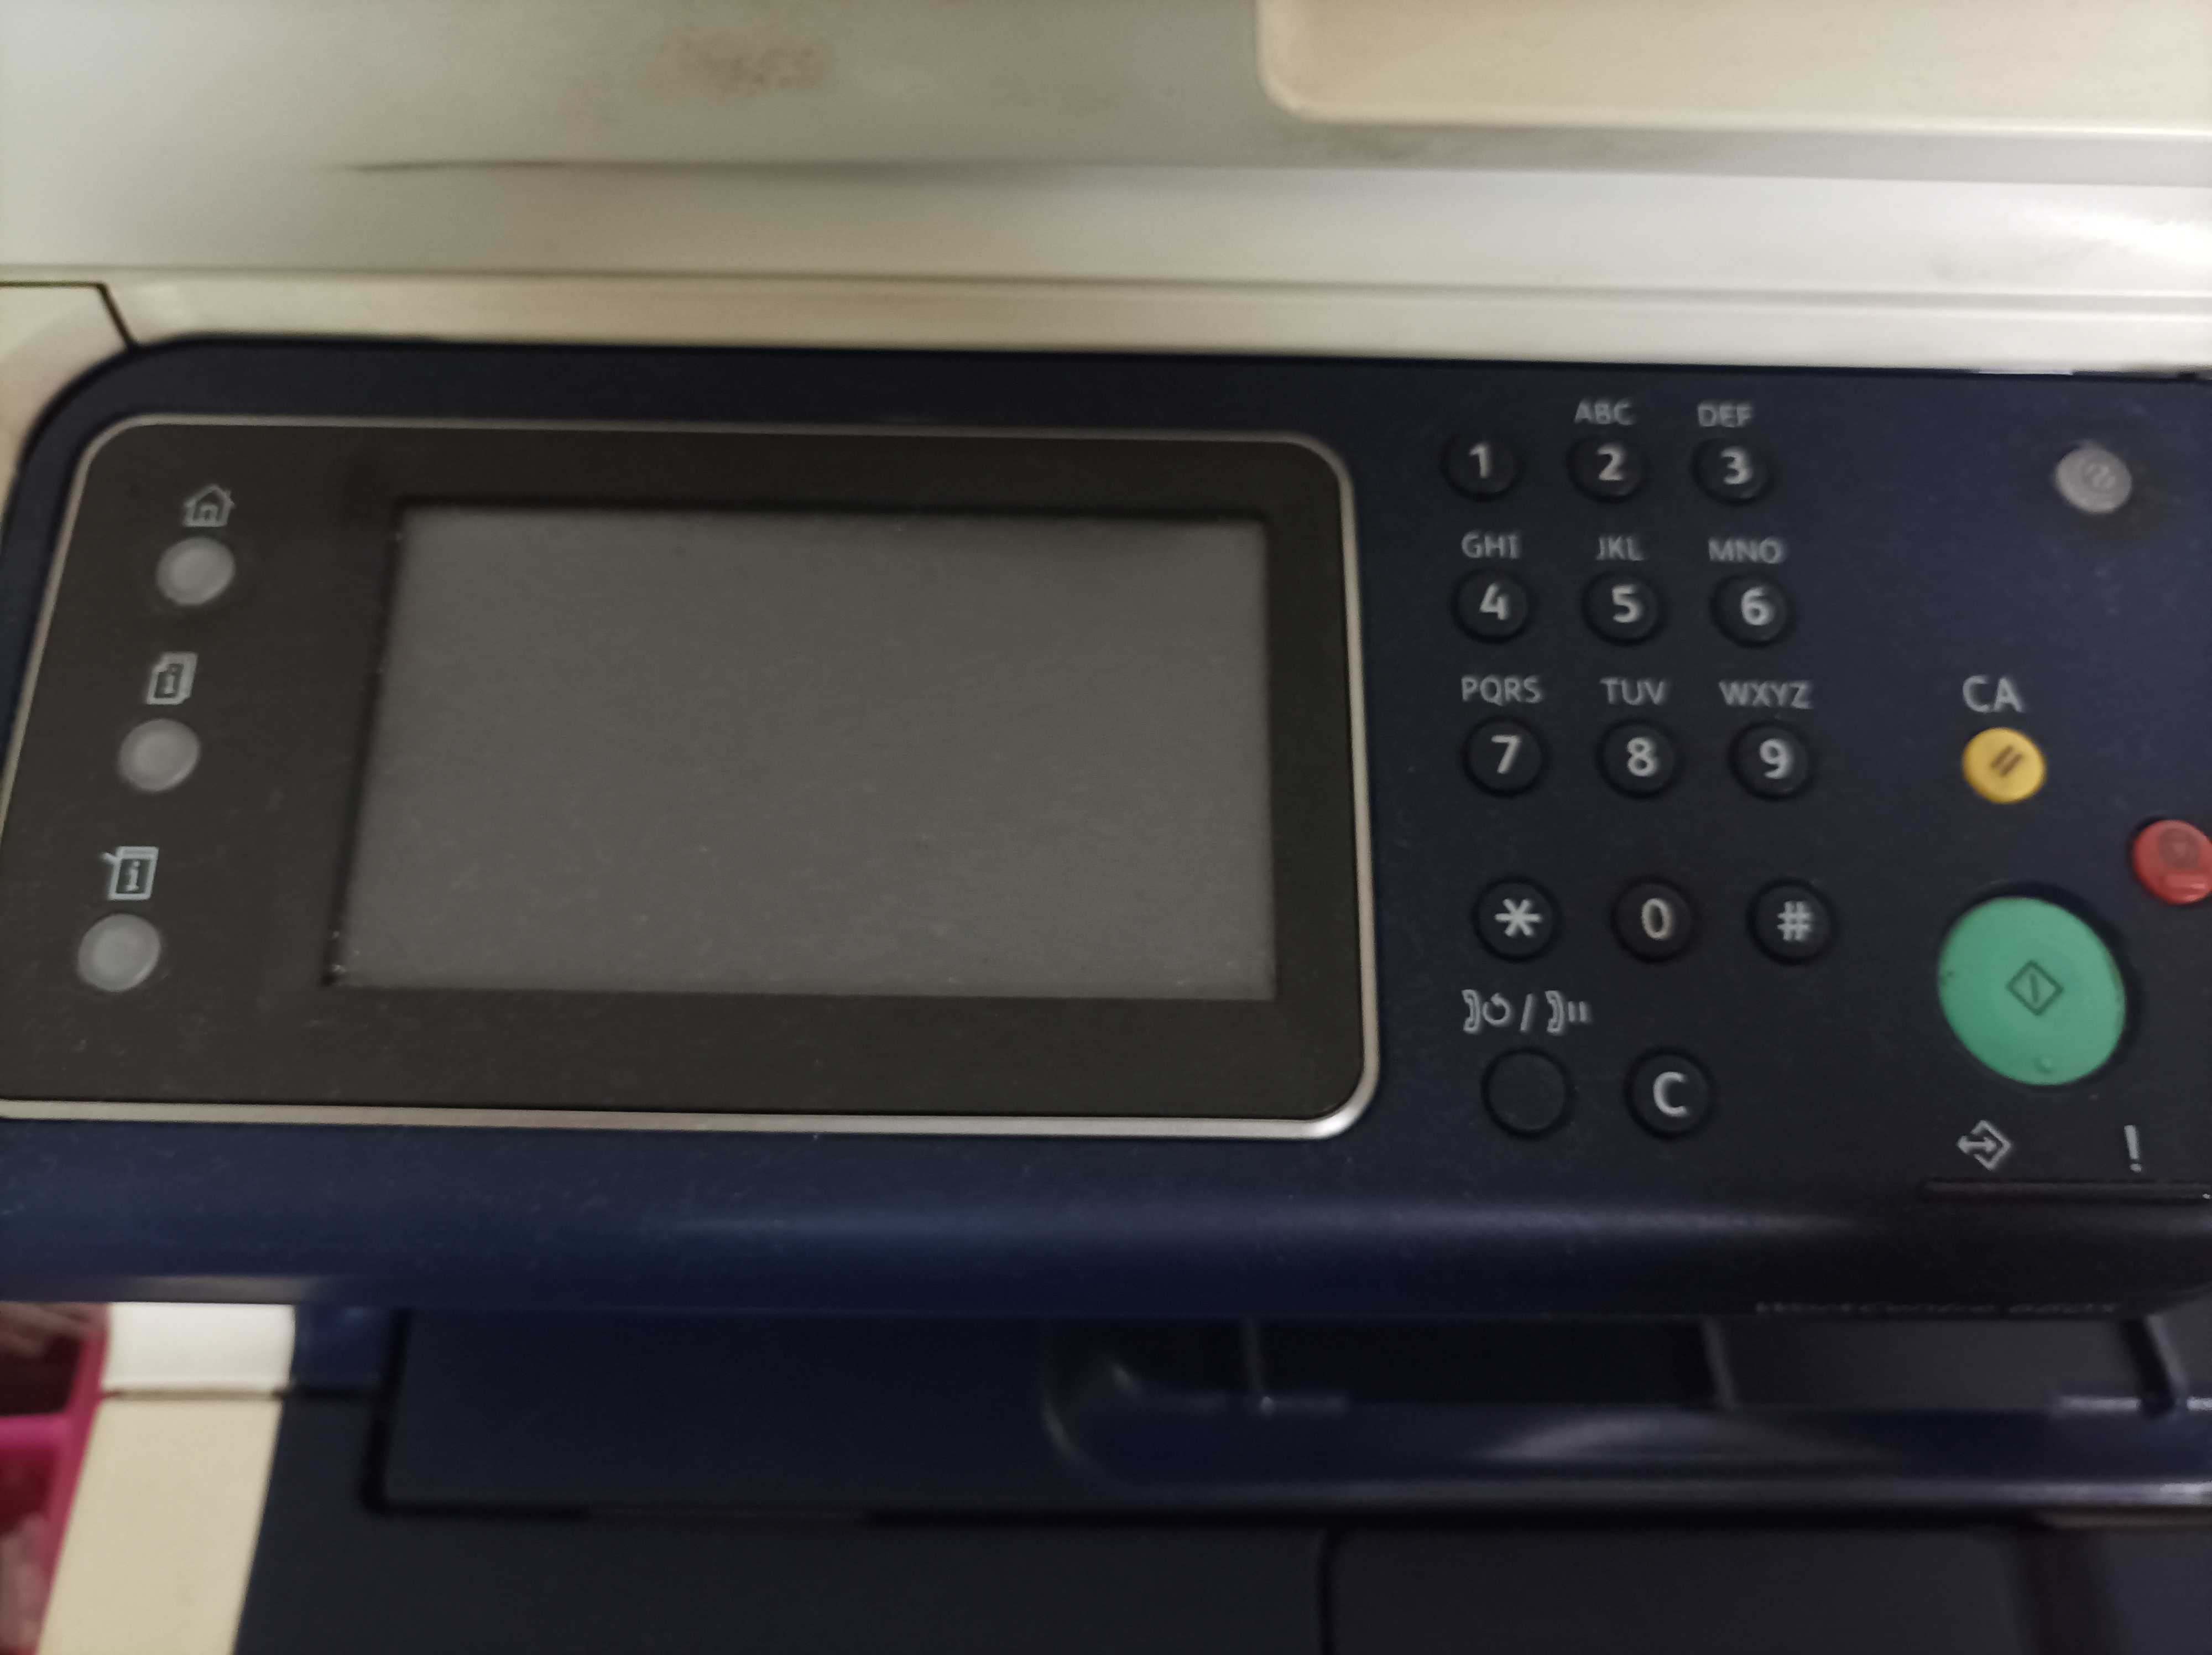 Fotocopiadora marca Xerox modelo WorkCentre 6605